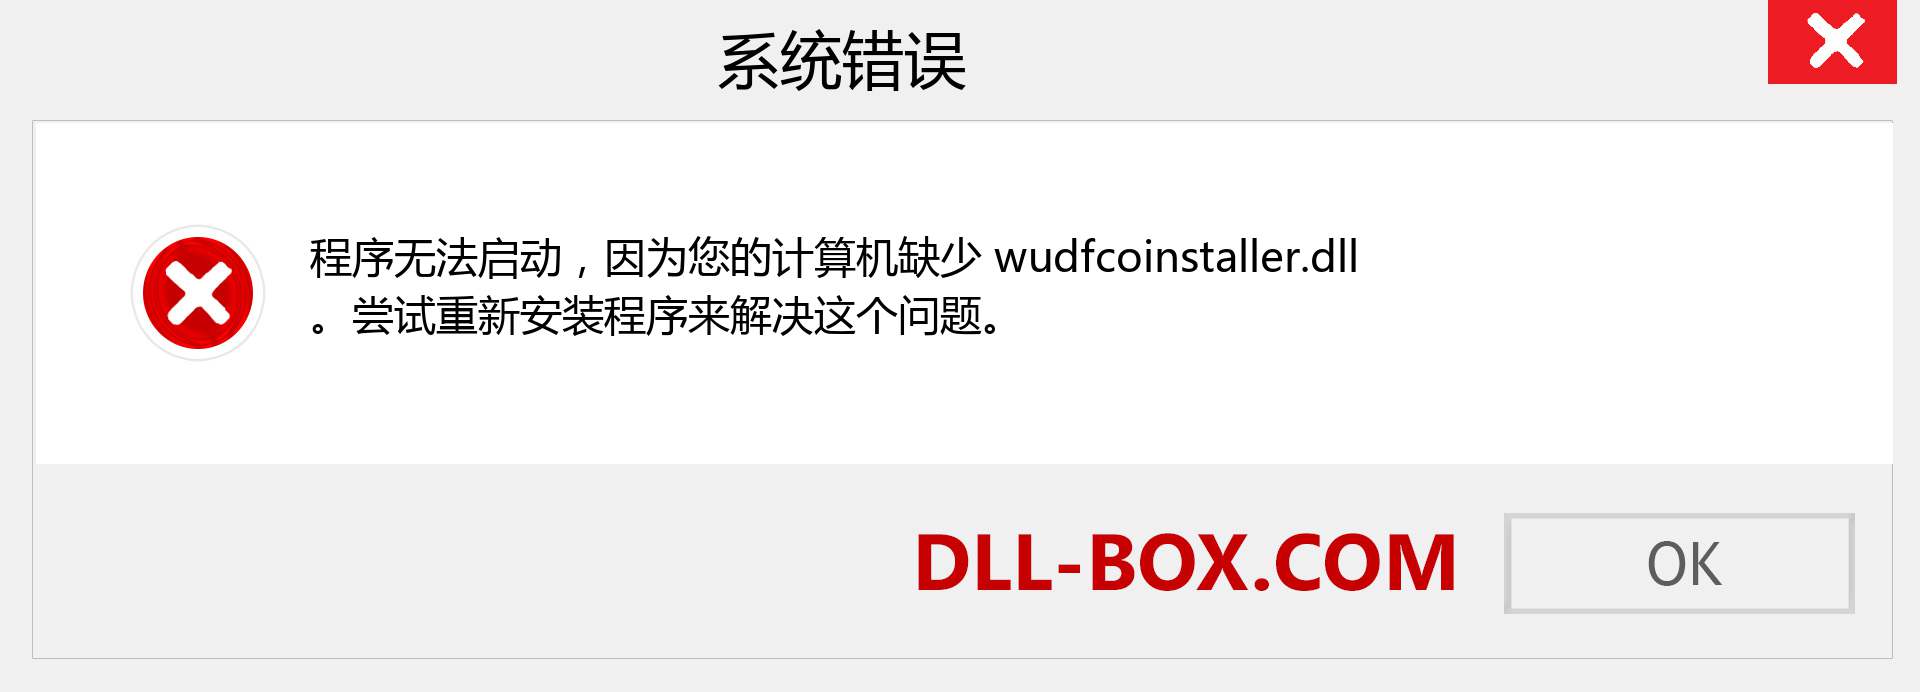 wudfcoinstaller.dll 文件丢失？。 适用于 Windows 7、8、10 的下载 - 修复 Windows、照片、图像上的 wudfcoinstaller dll 丢失错误